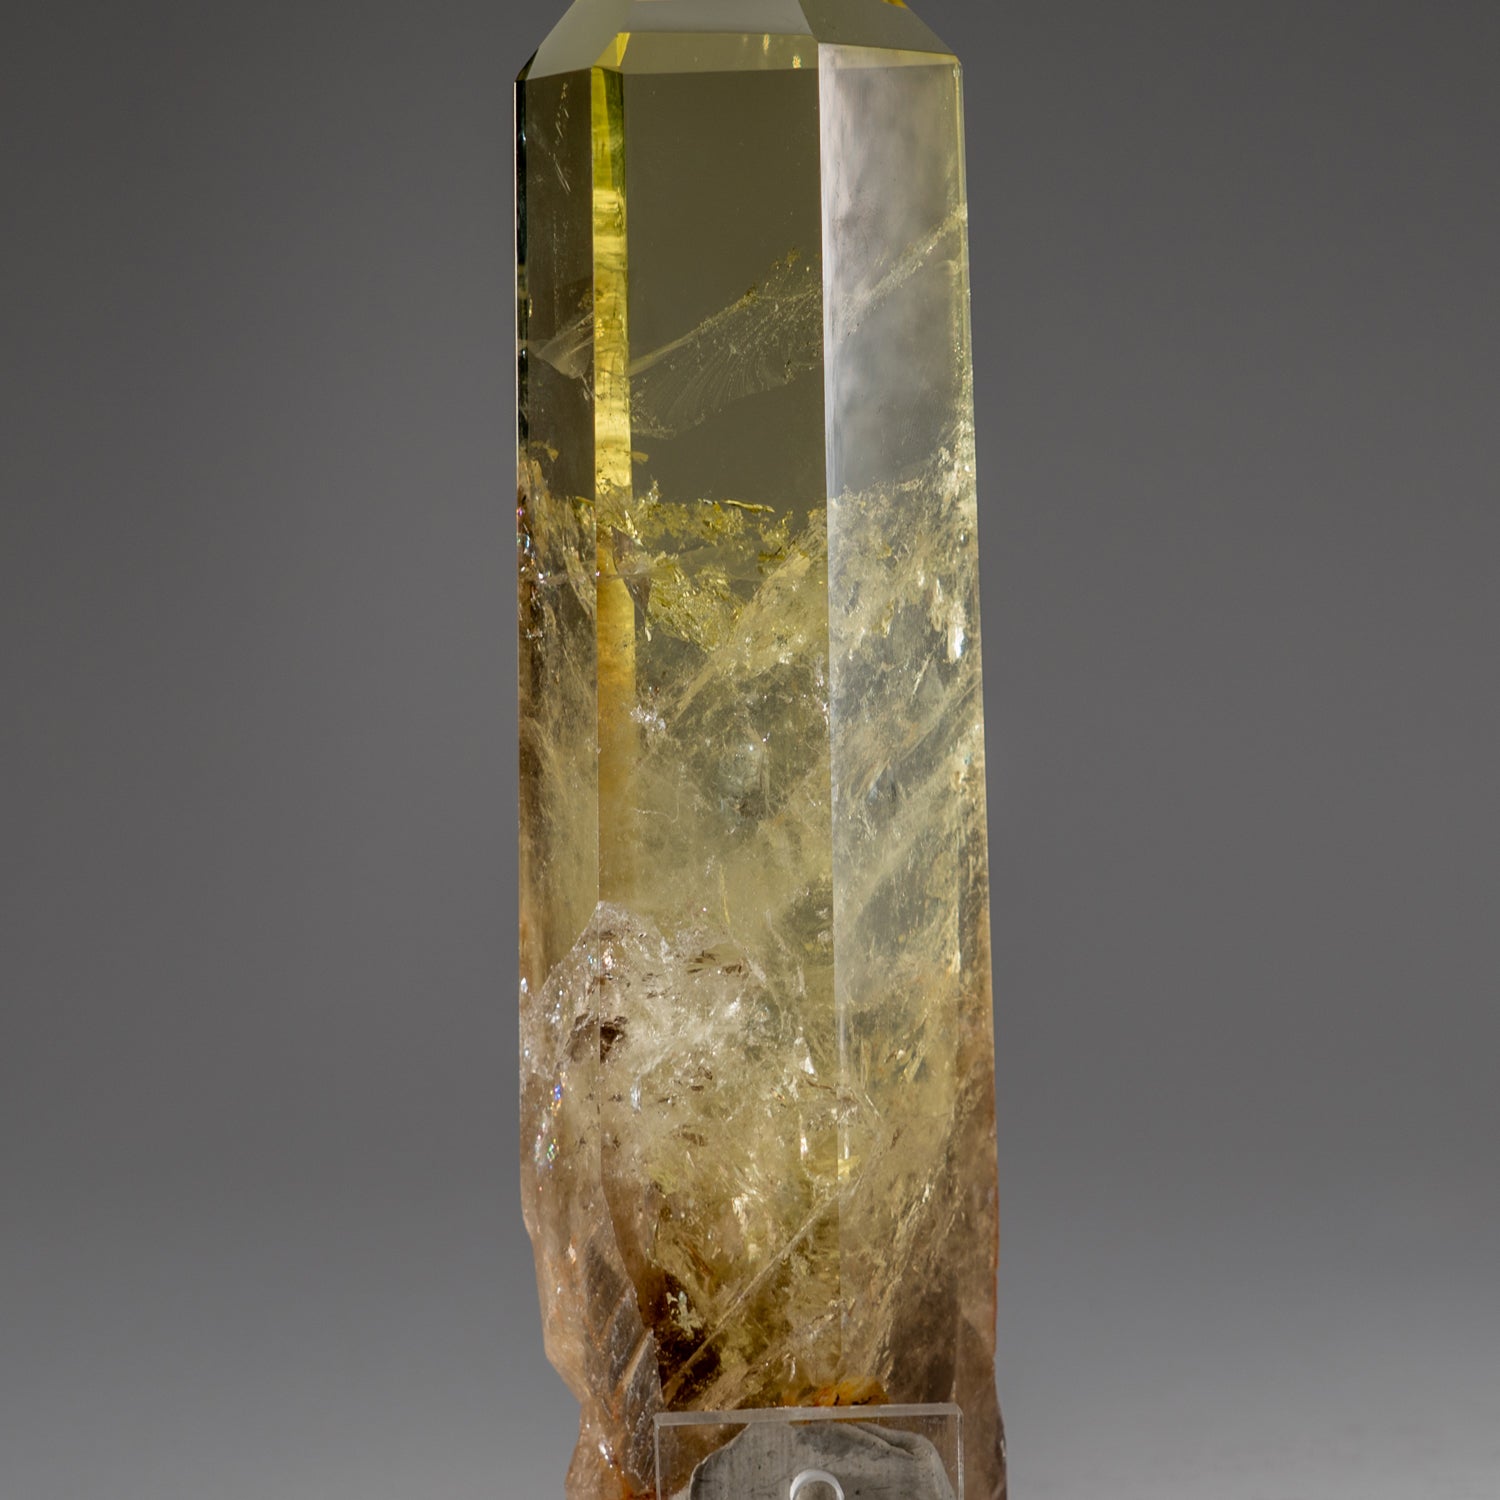 Genuine Museum Quality Citrine Crystal Point (2.4 lbs)